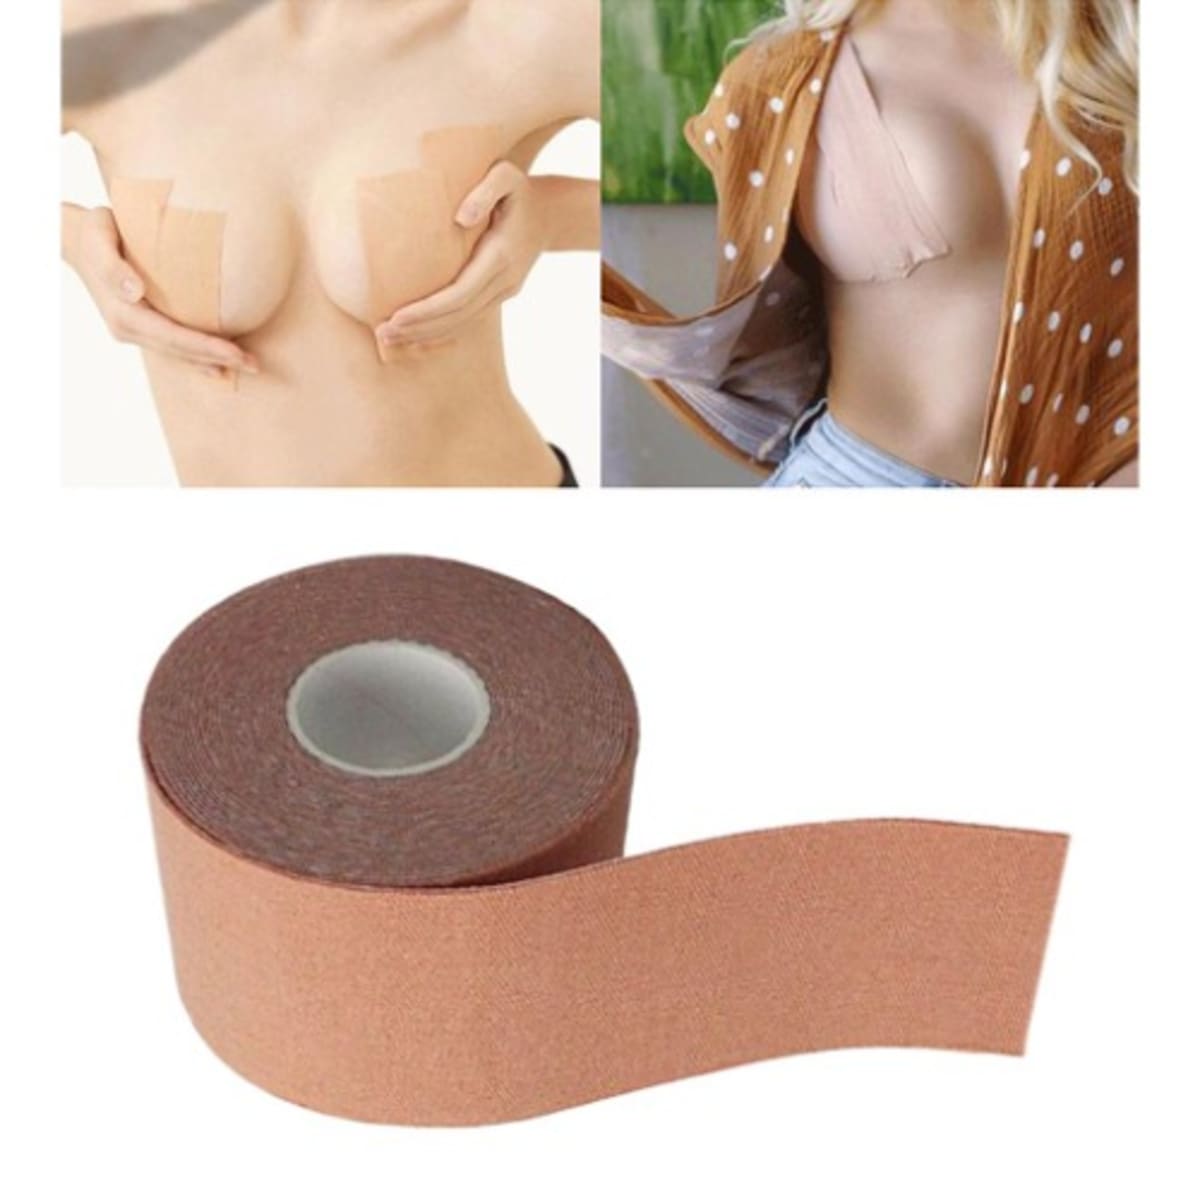 Bra Lift Boob Tape - Women Silicone Adhesive Strapless Sticky Bra